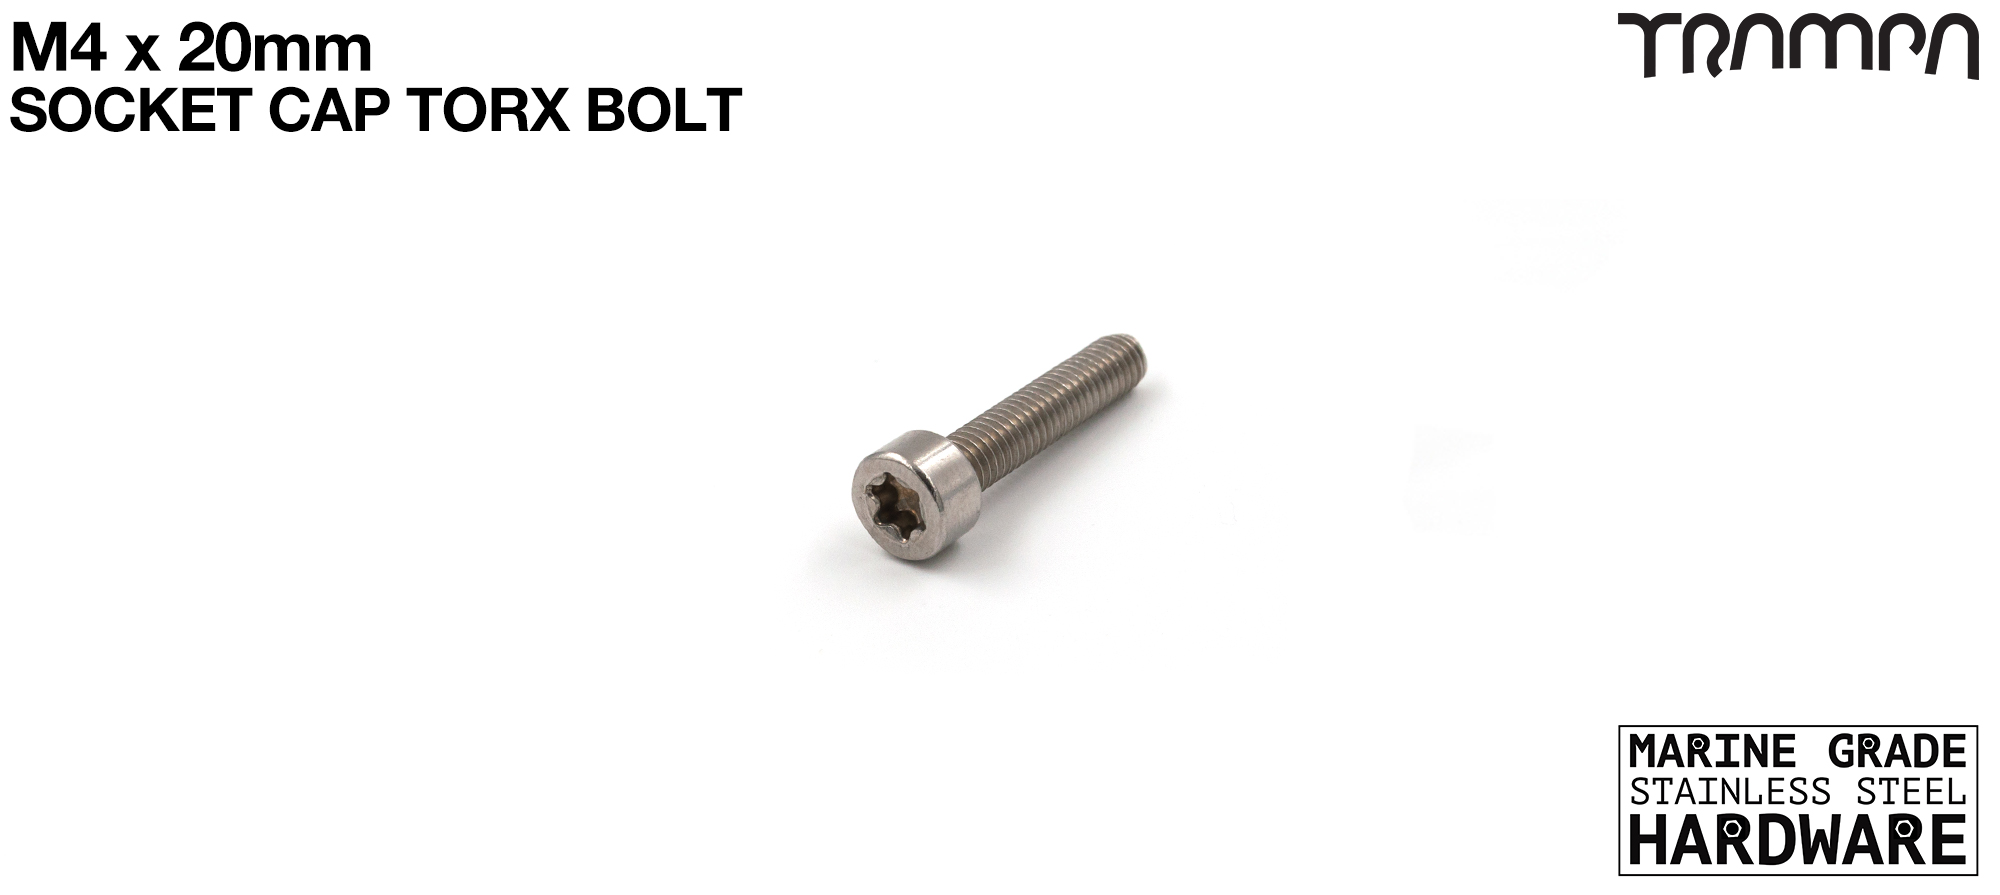 M4 x 20mm Socket Capped Head TORX Bolt ISO 4762 Marine Grade Stainless Steel 